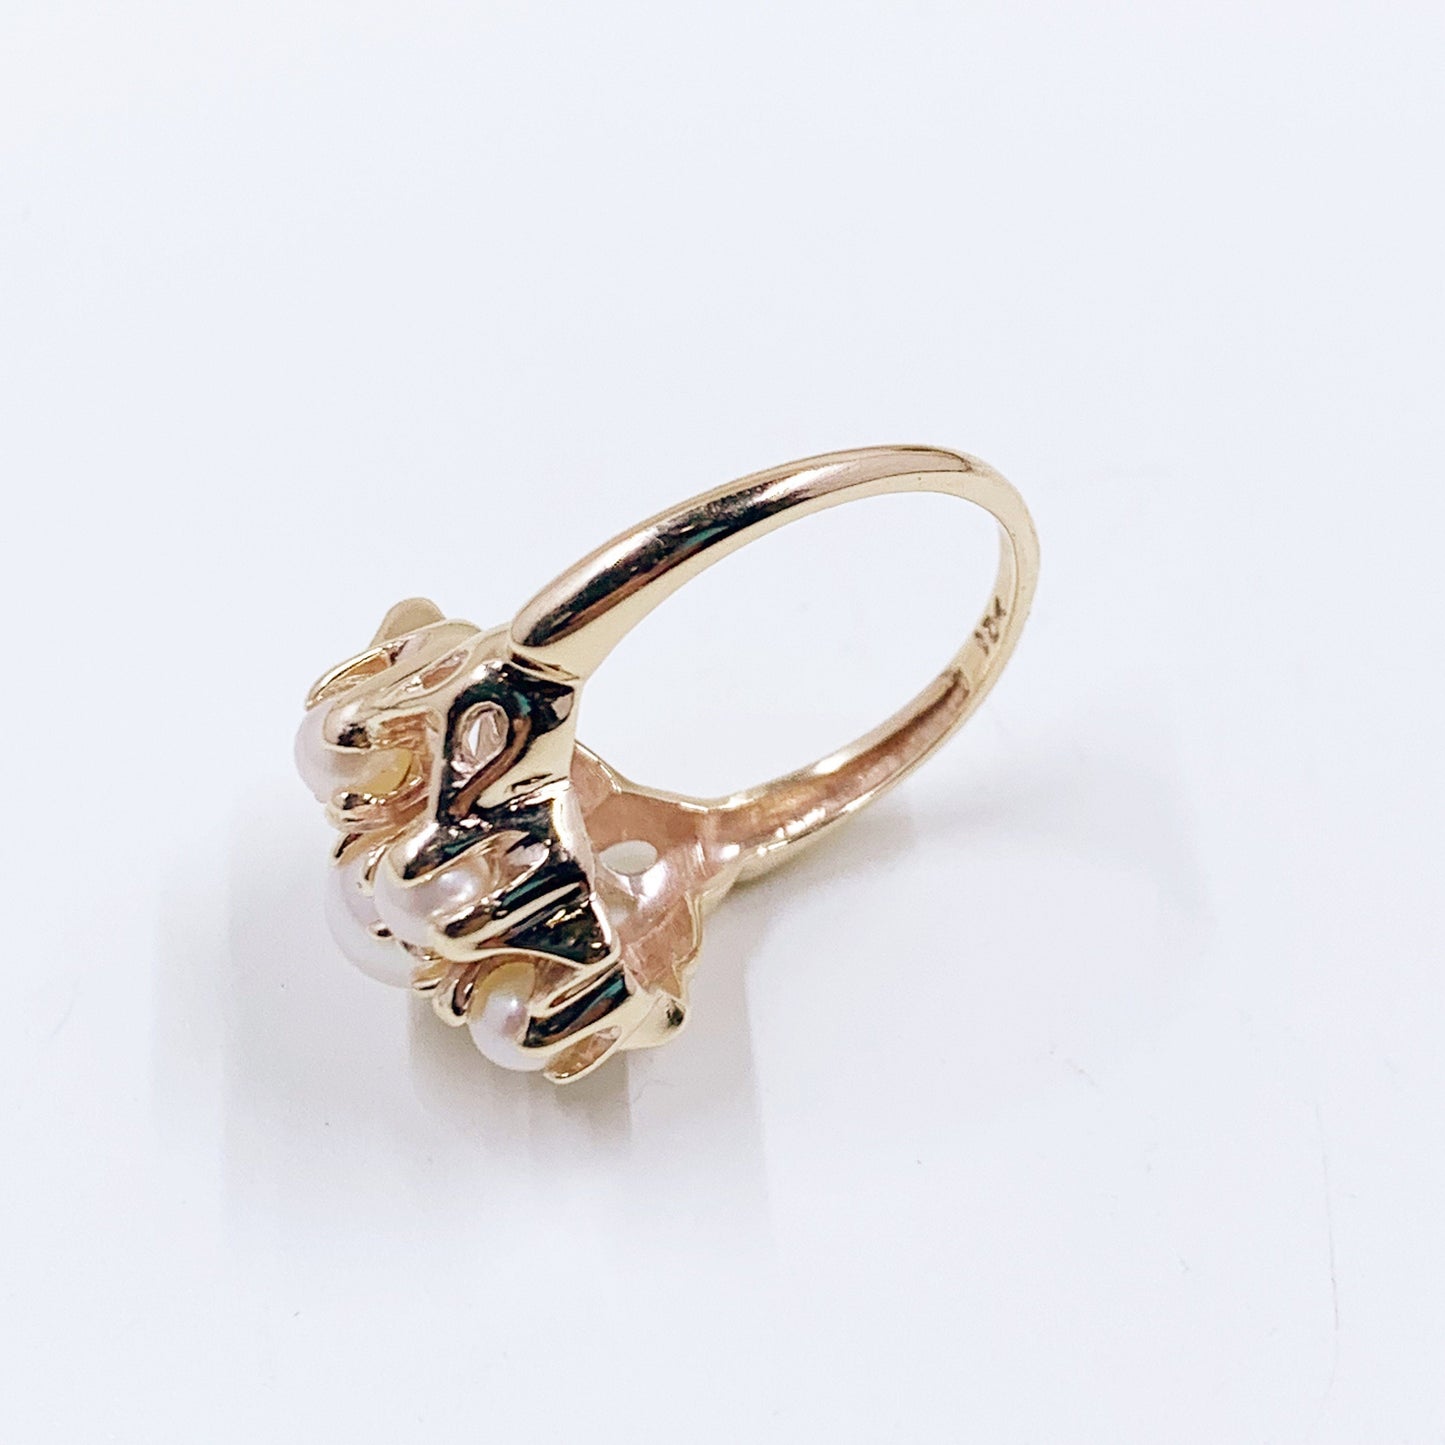 Vintage 10k Gold Pearl Cluster Ring | 10K Gold Pearl Flower Cluster Ring | Size 5 1/2 Ring